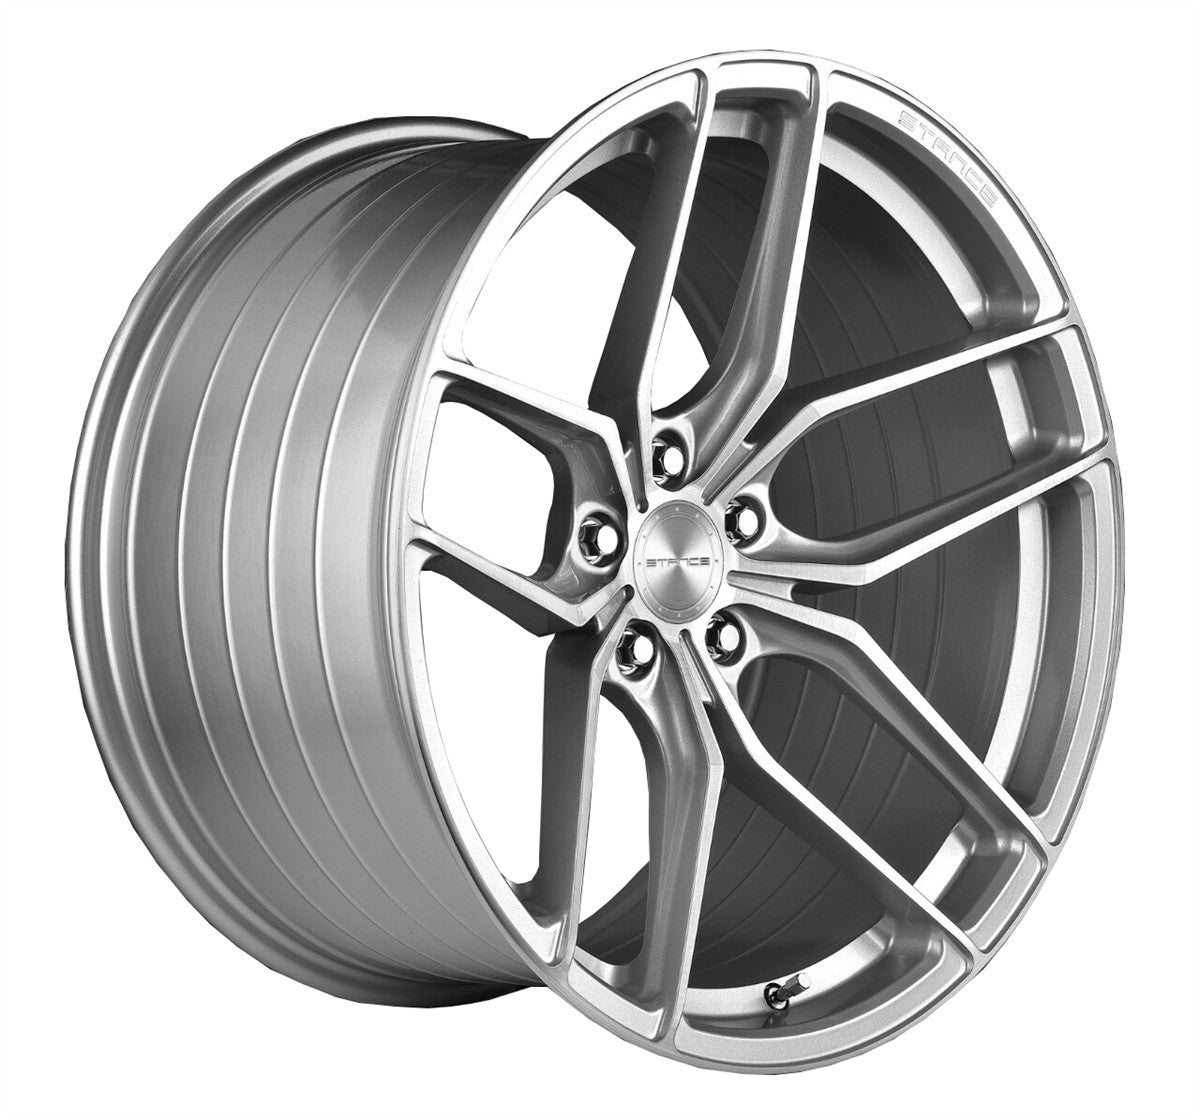 19” Stance SF03 Brush Silver Concave Wheels - Set of 4 - Motorsports LA